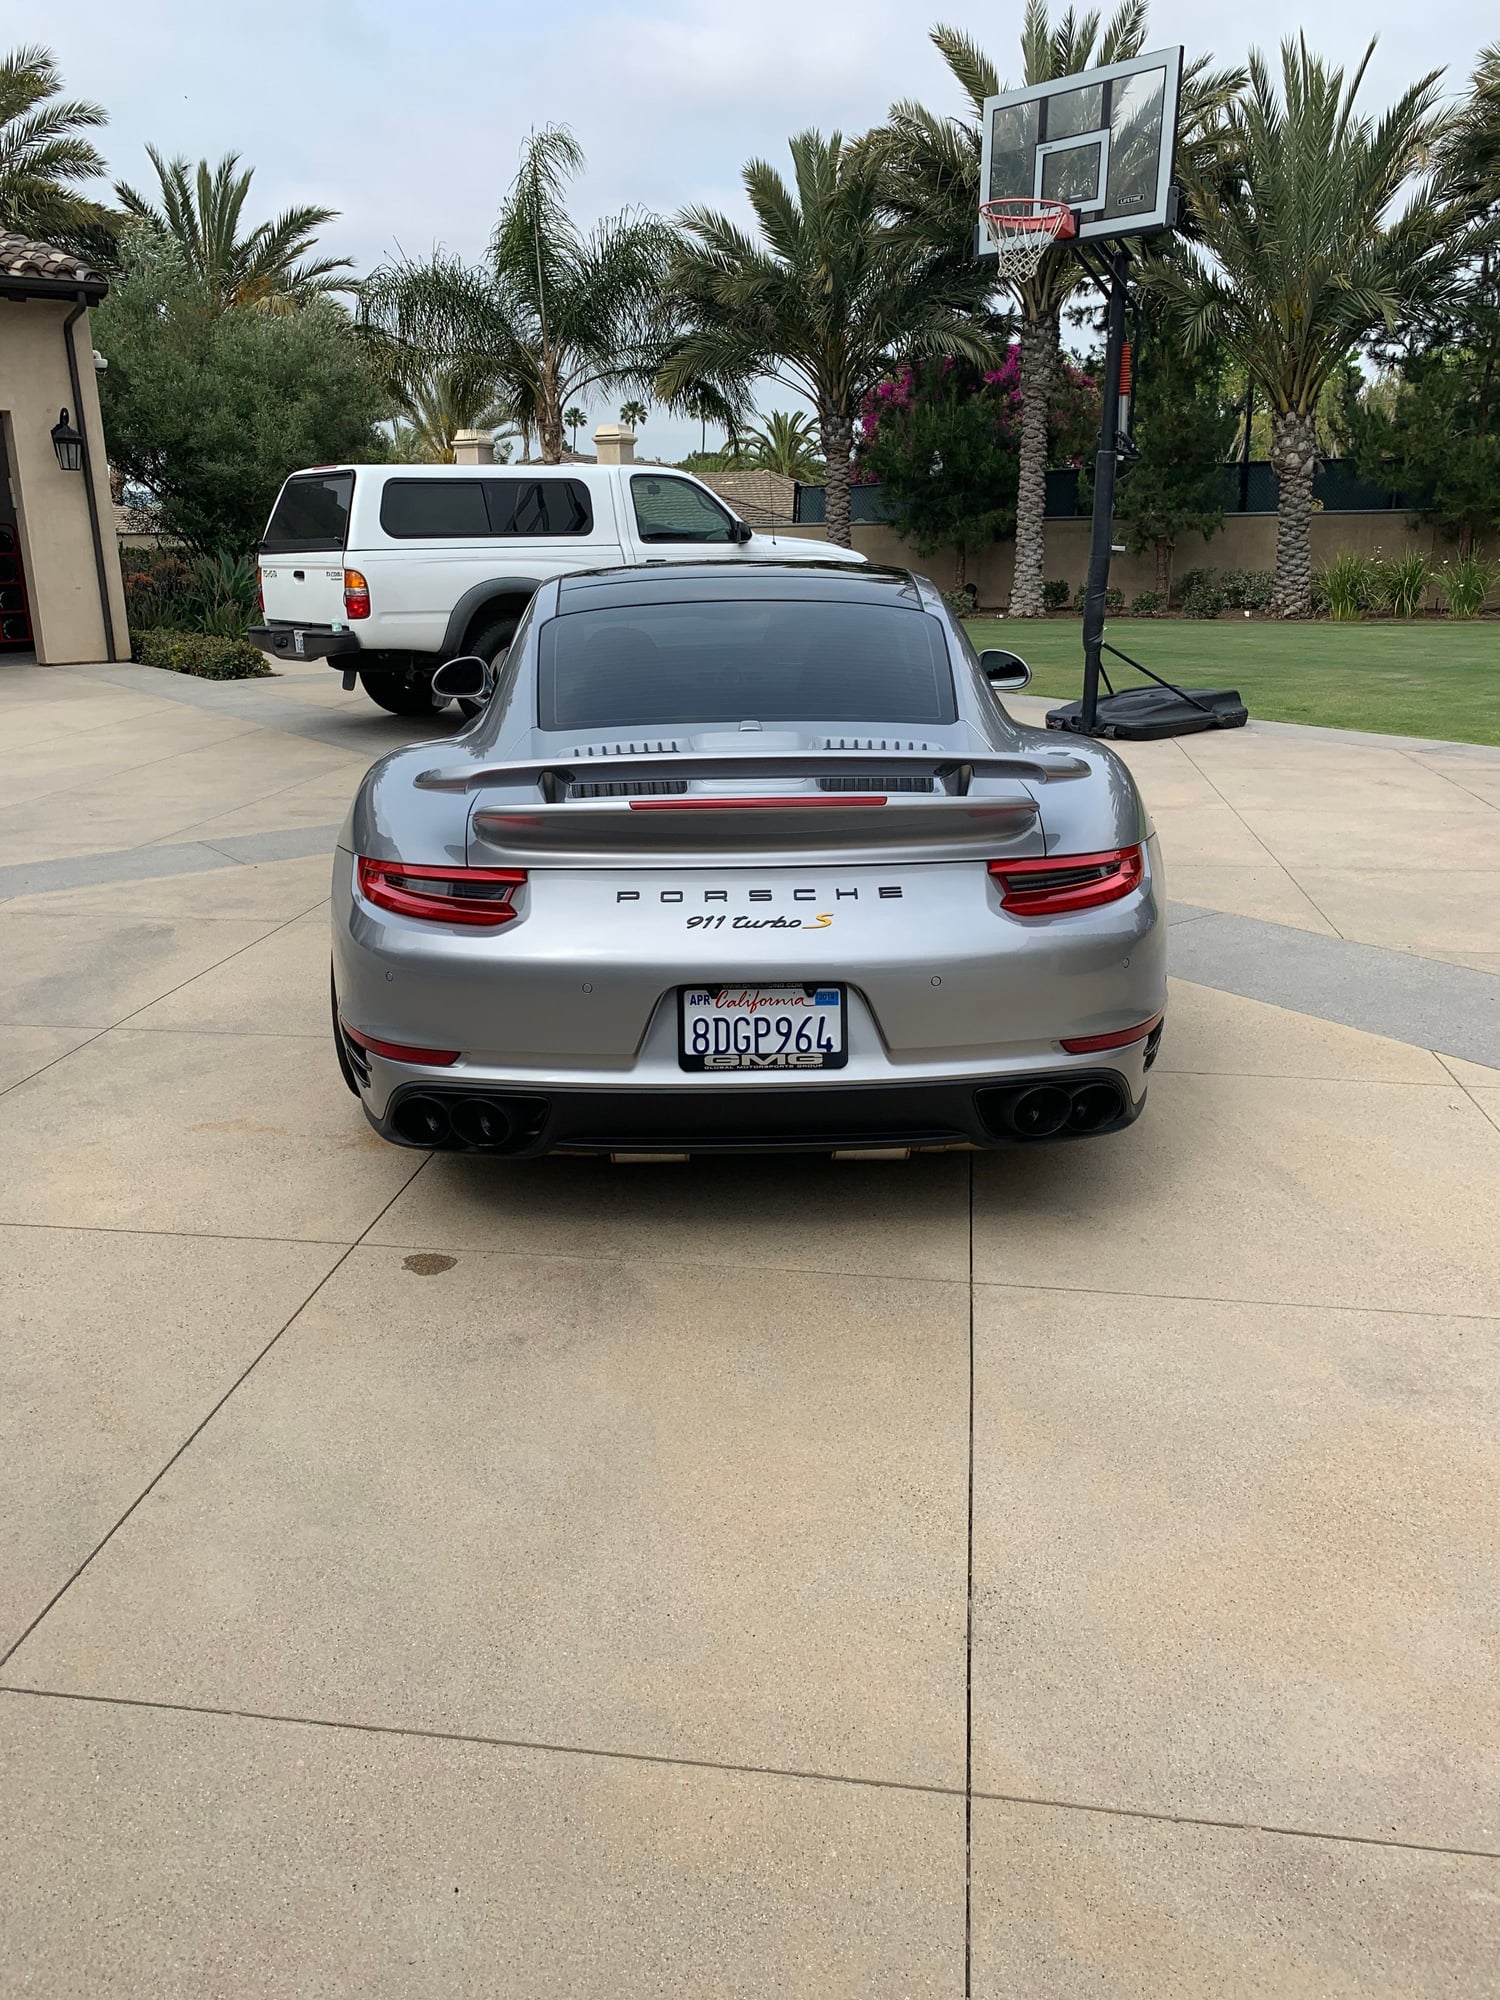 2018 Porsche 911 - 2018 Porsche 911 Turbo S - Used - VIN wp0ad2a91js156376 - 2,786 Miles - Coupe - Silver - Anaheim, CA 92807, United States